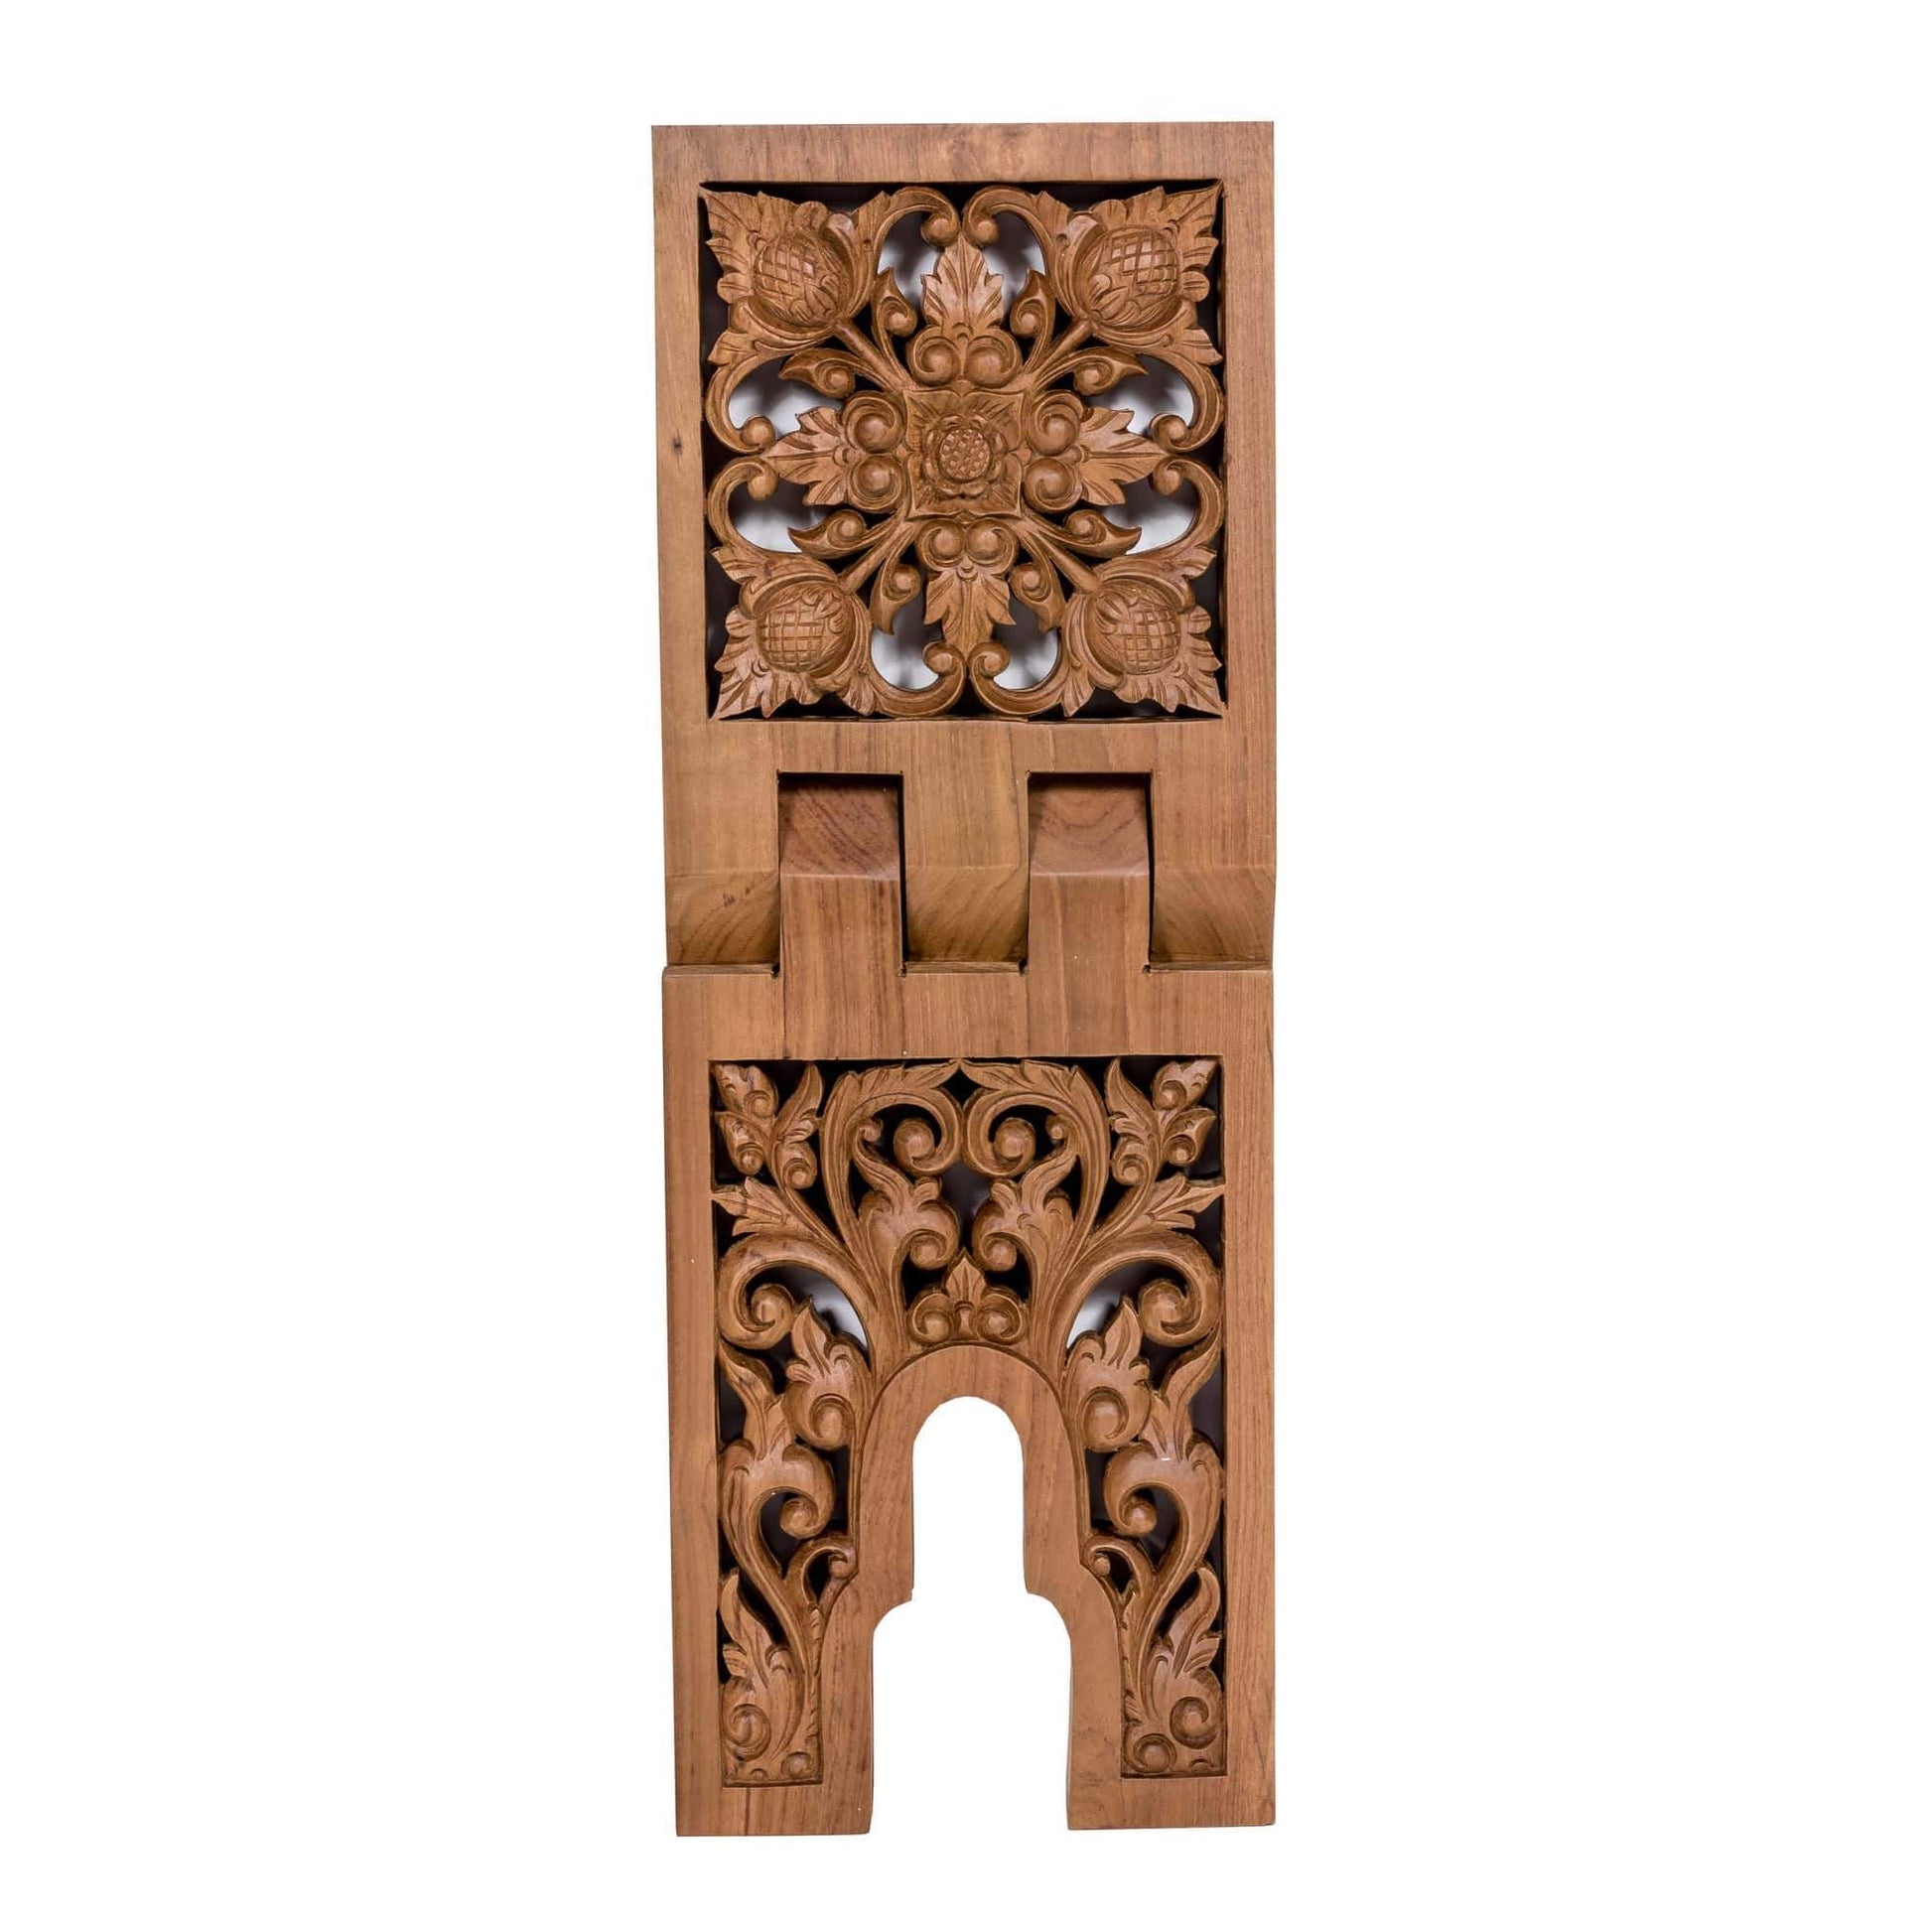 Rehal - Chip Carving - 20cm Length x 55cm Height - Design 2 - Mahajati